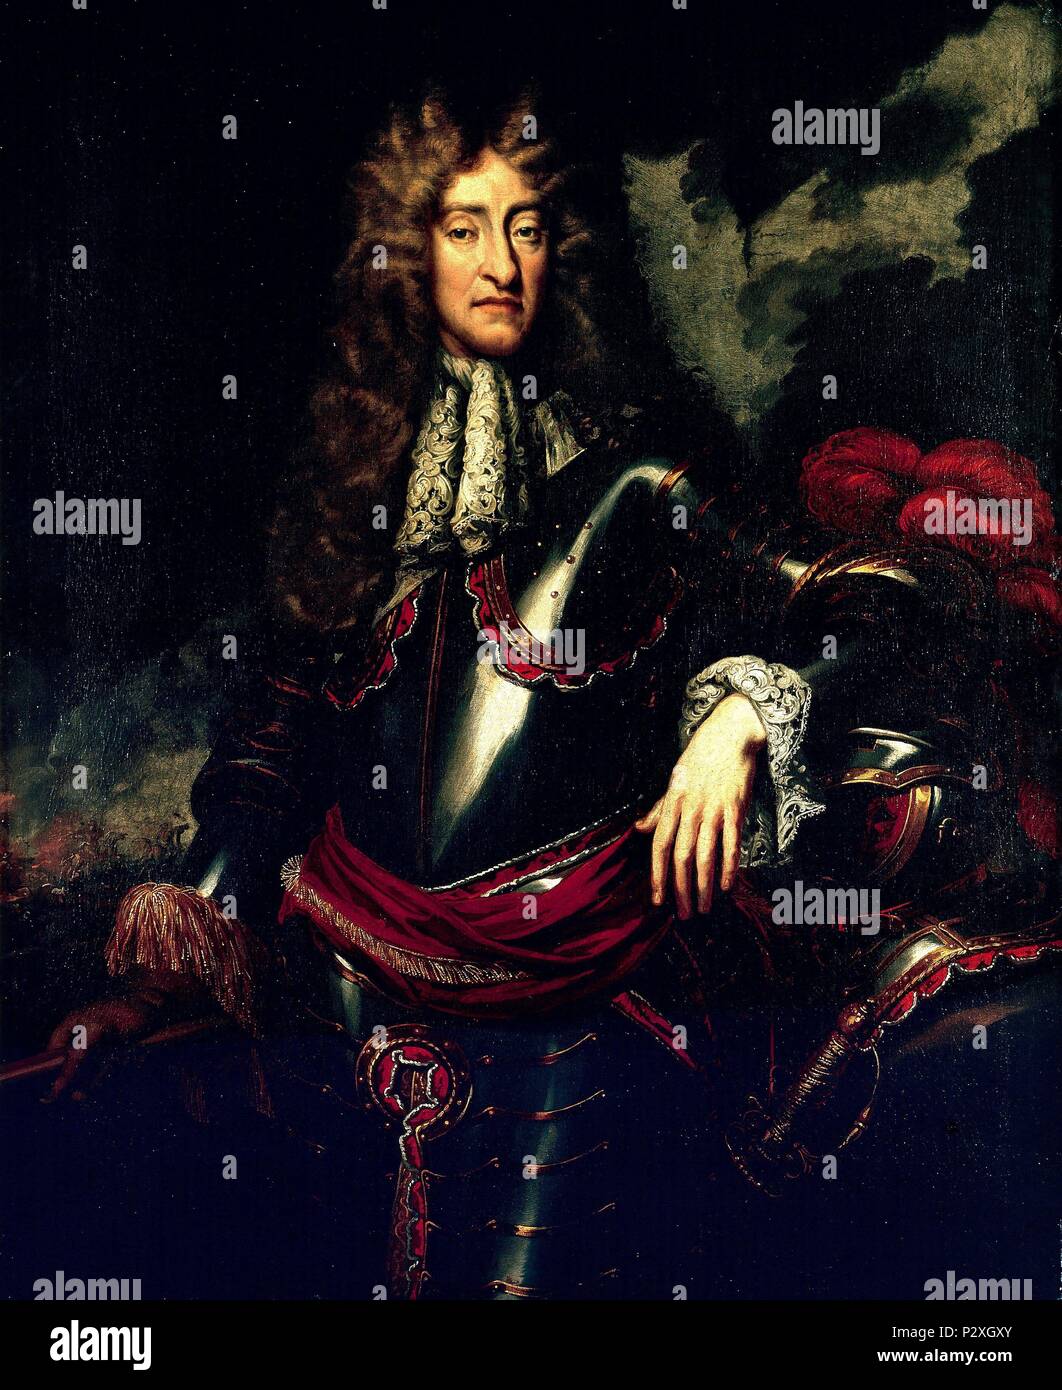 JAIME II REY DE INGLATERRA (1633-1701). Stock Photo